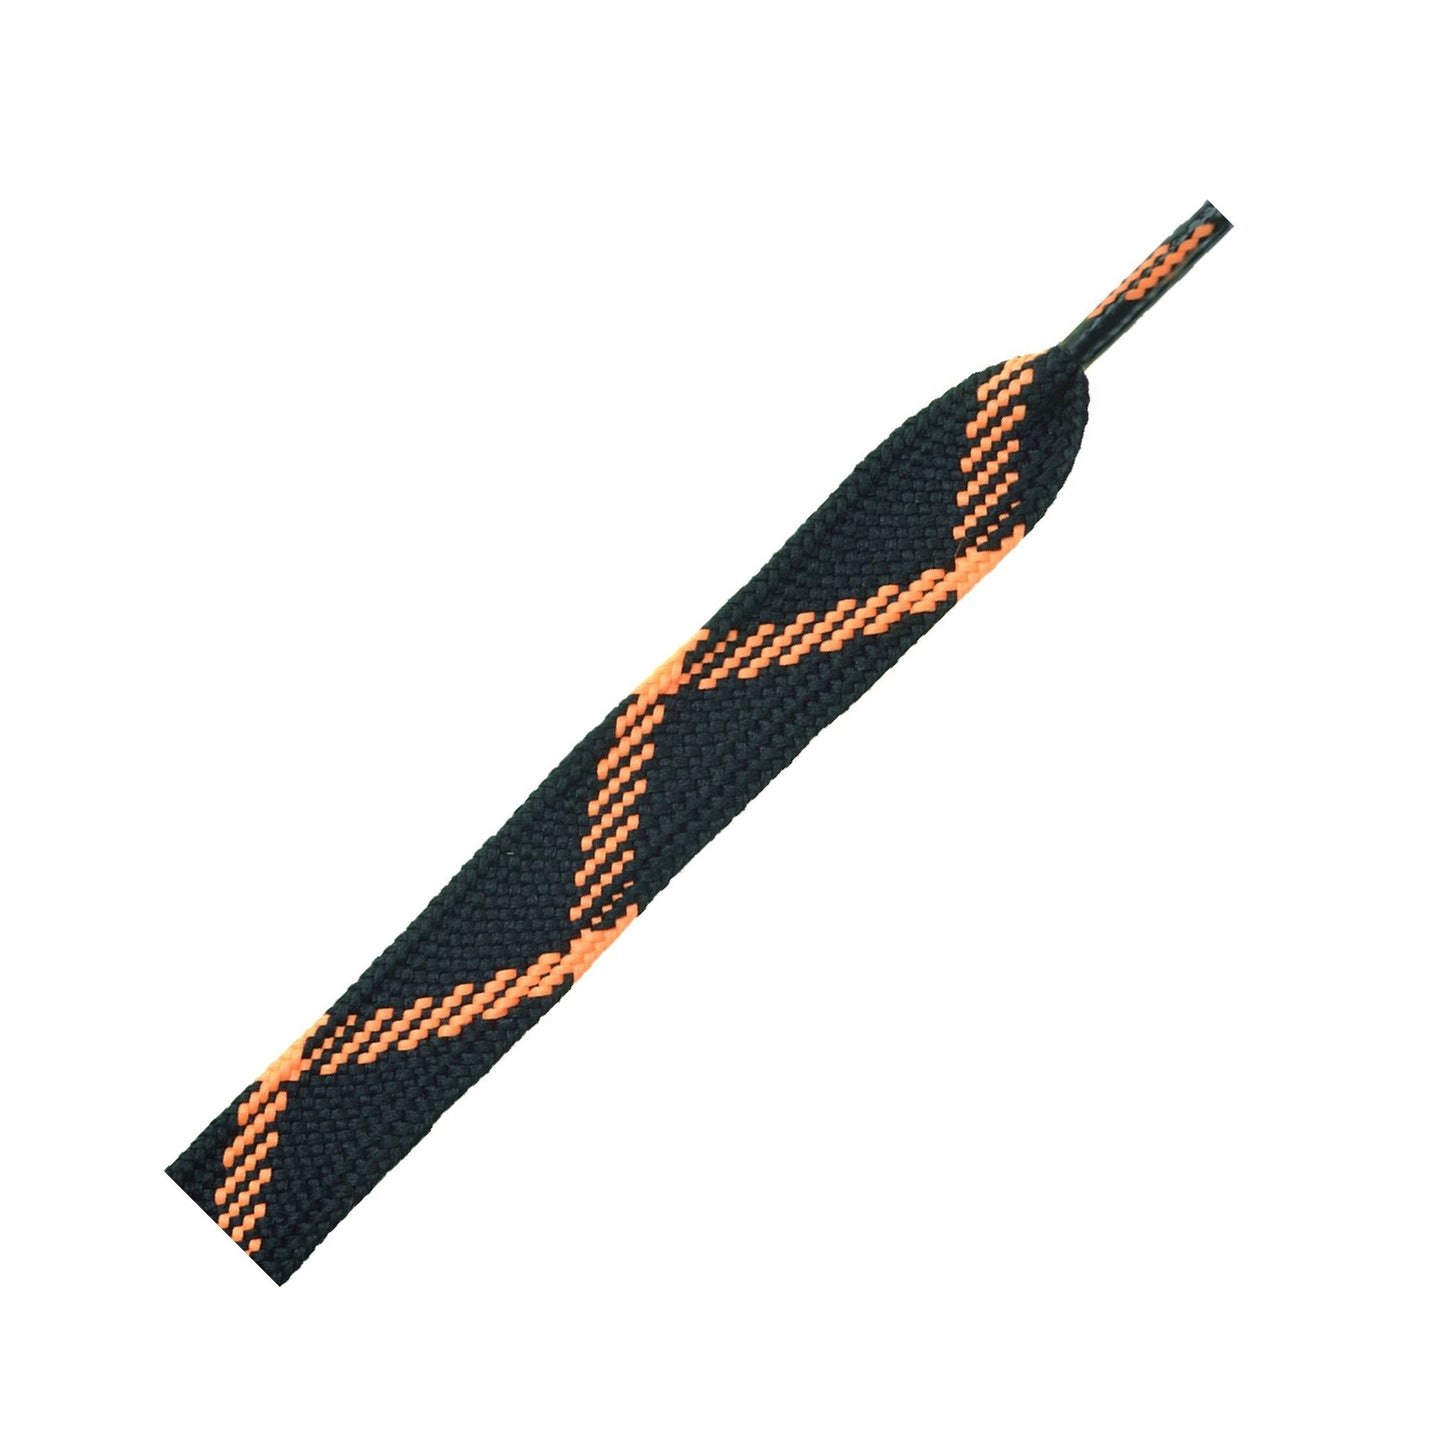 114cm Crazy Skate Shoe Laces - Black and Orange